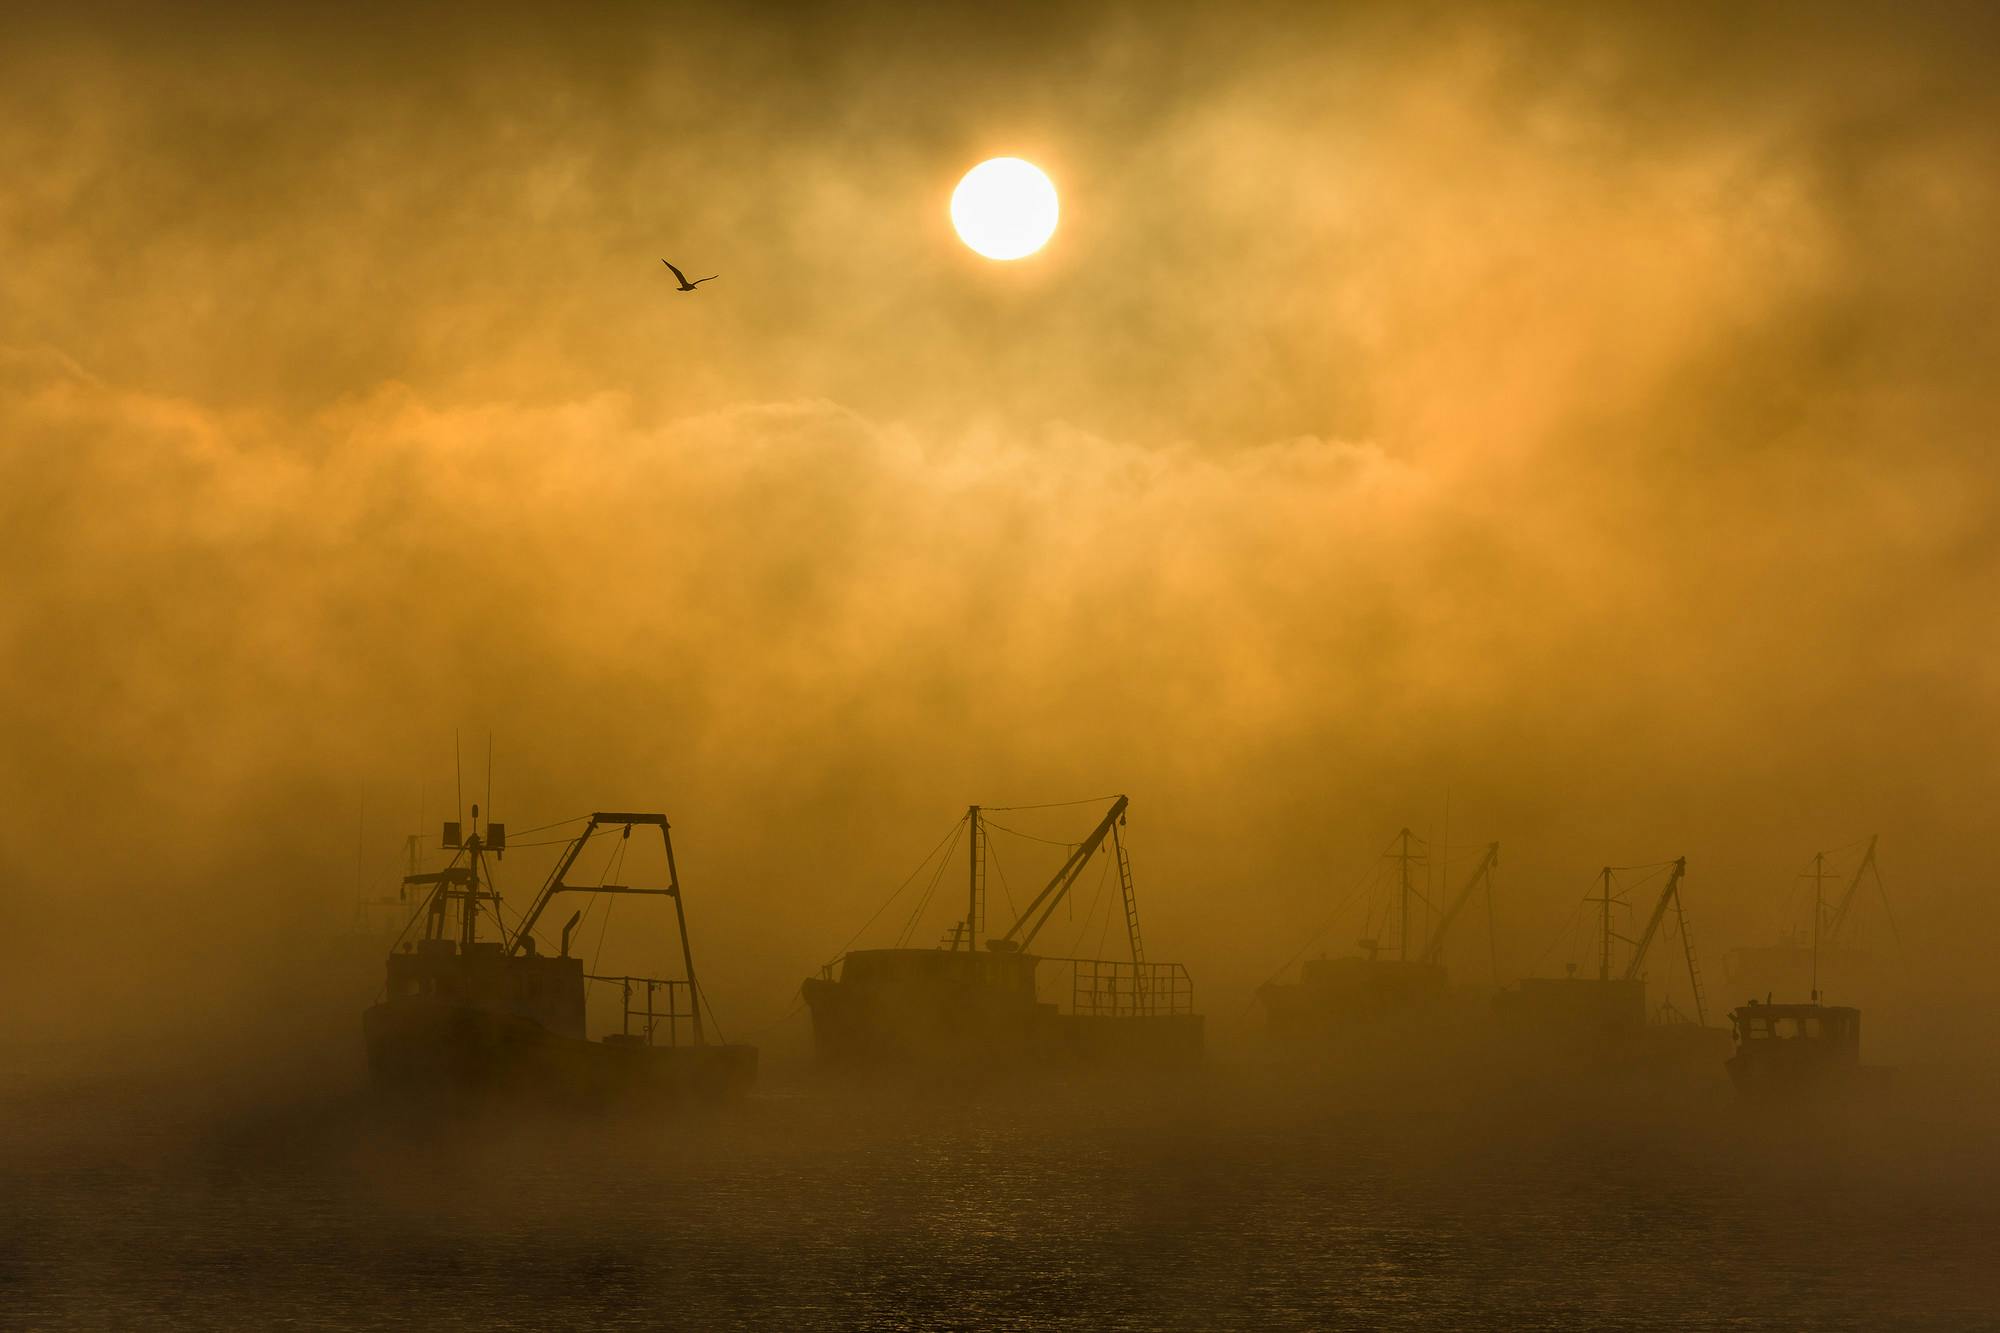 Gull and Boats in Sea Smoke